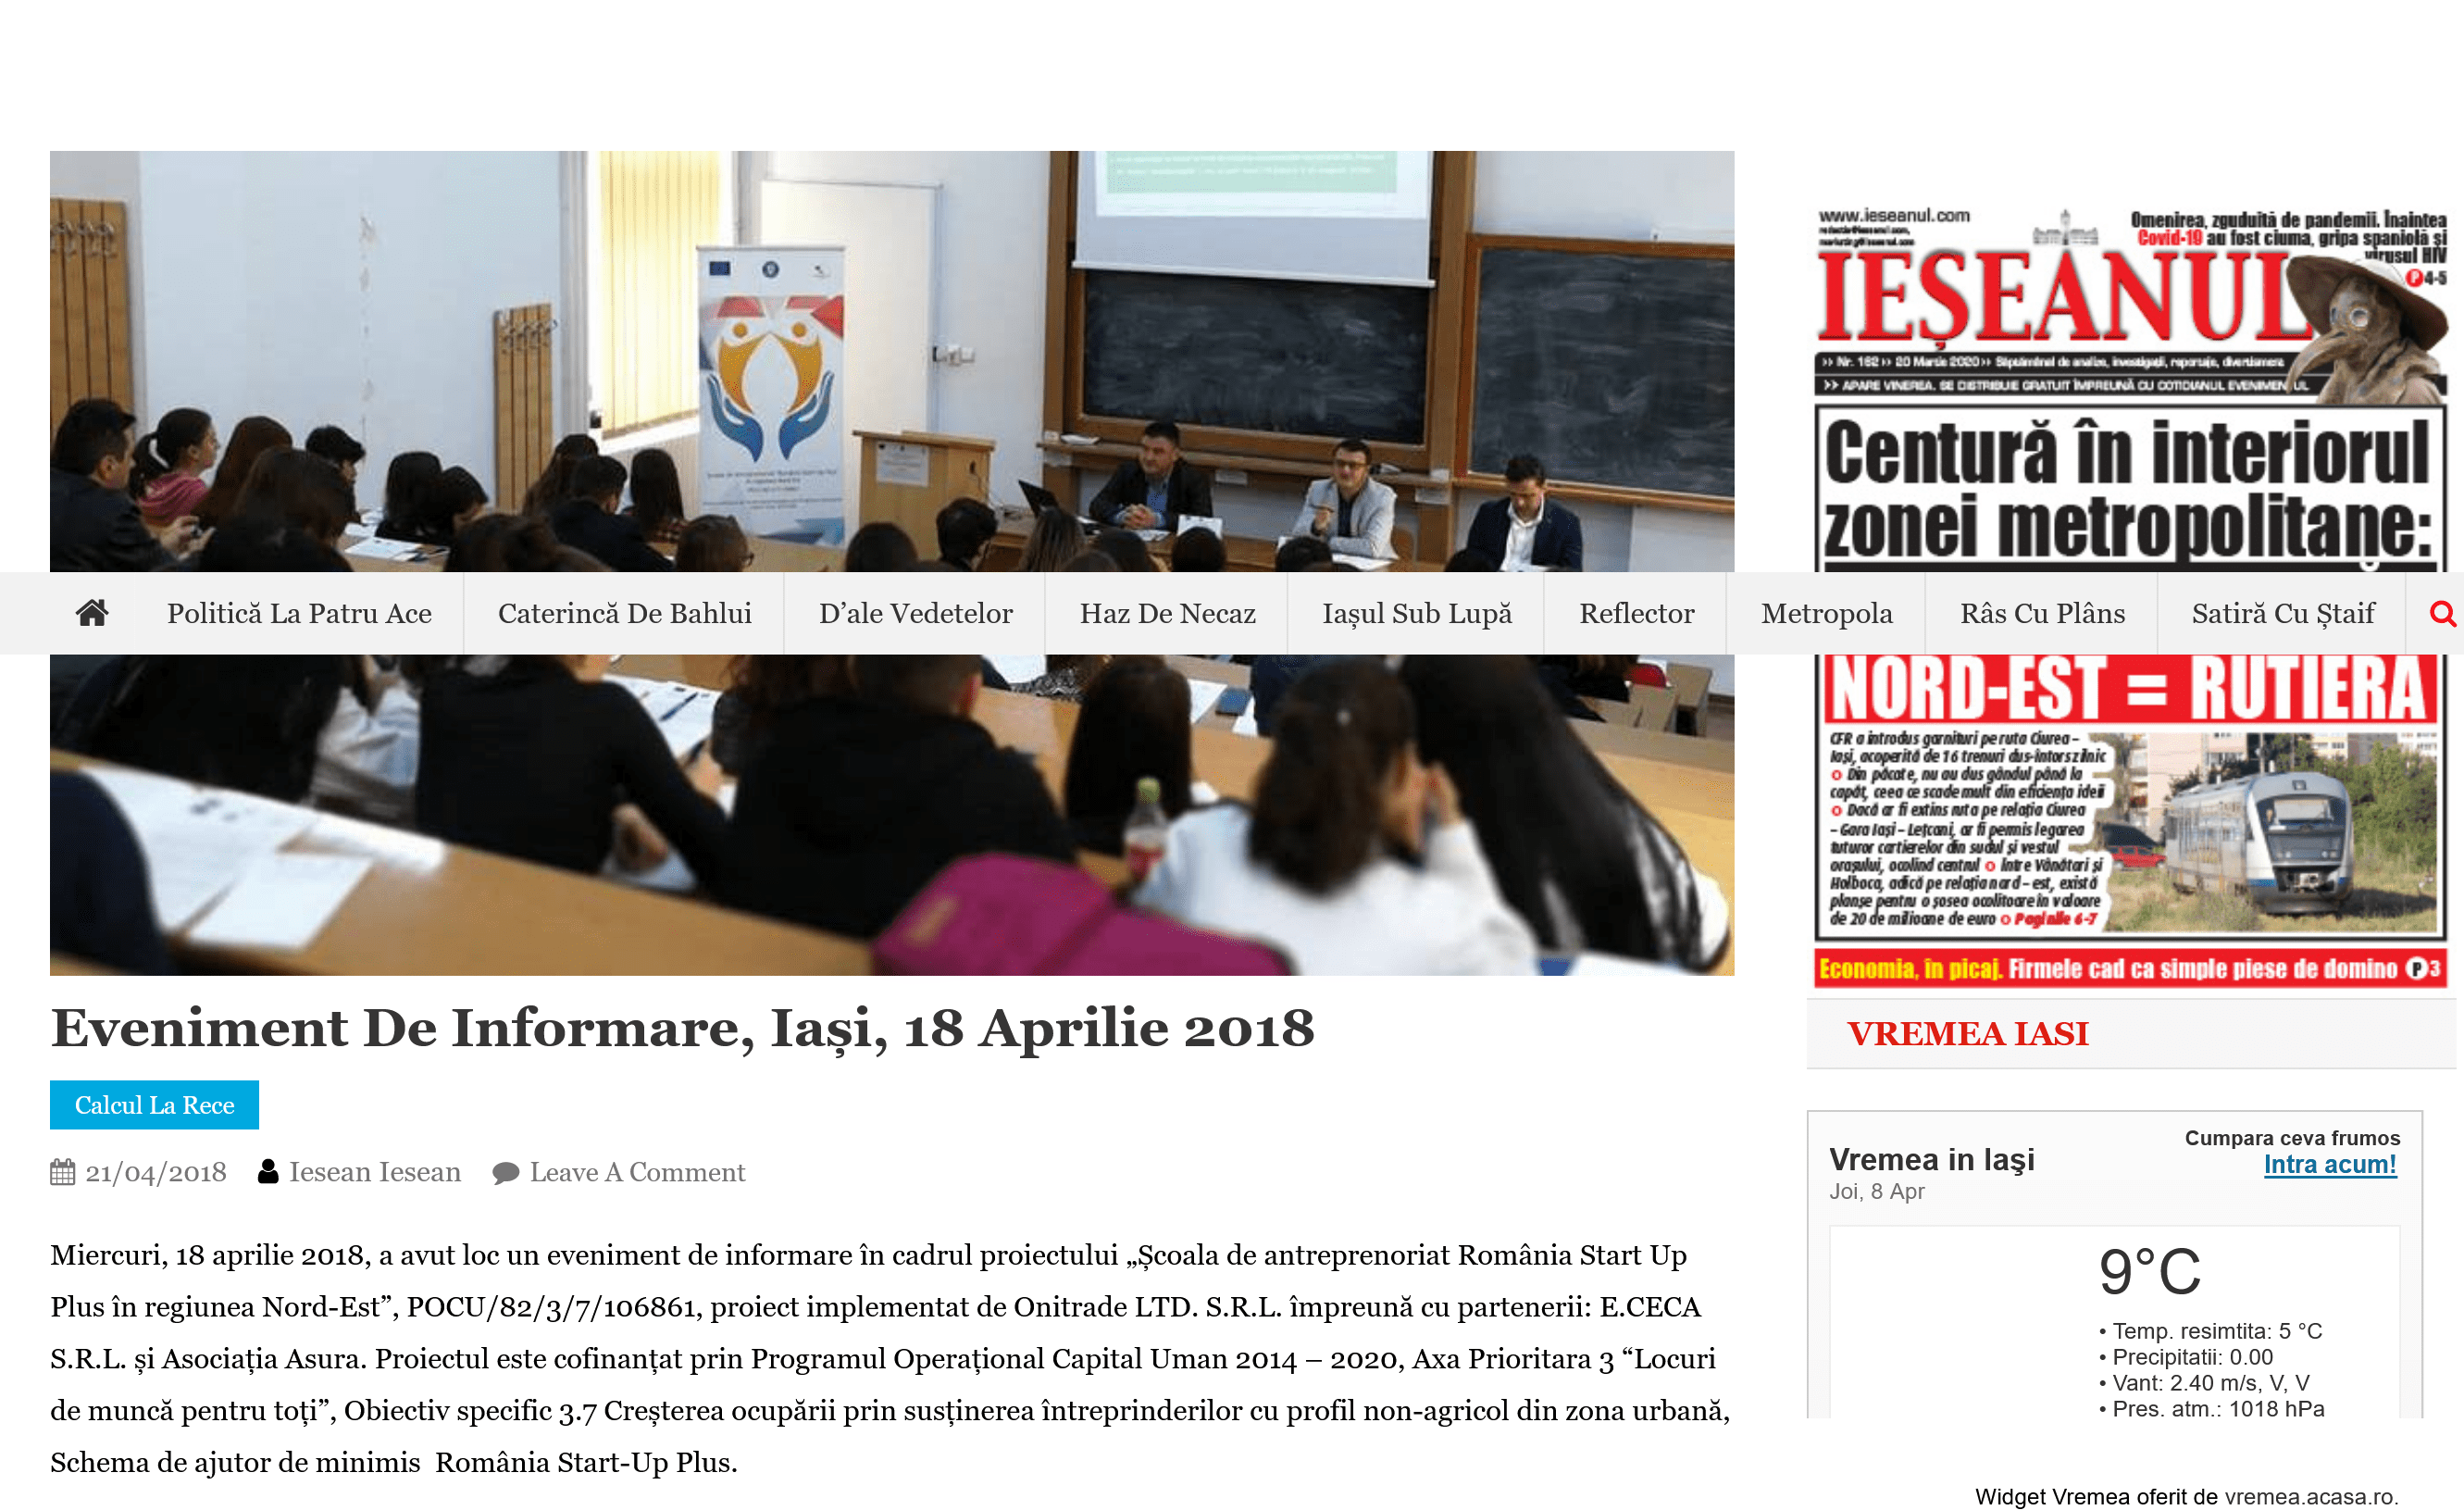 Eveniment de informare, Iași, 18 aprilie 2018